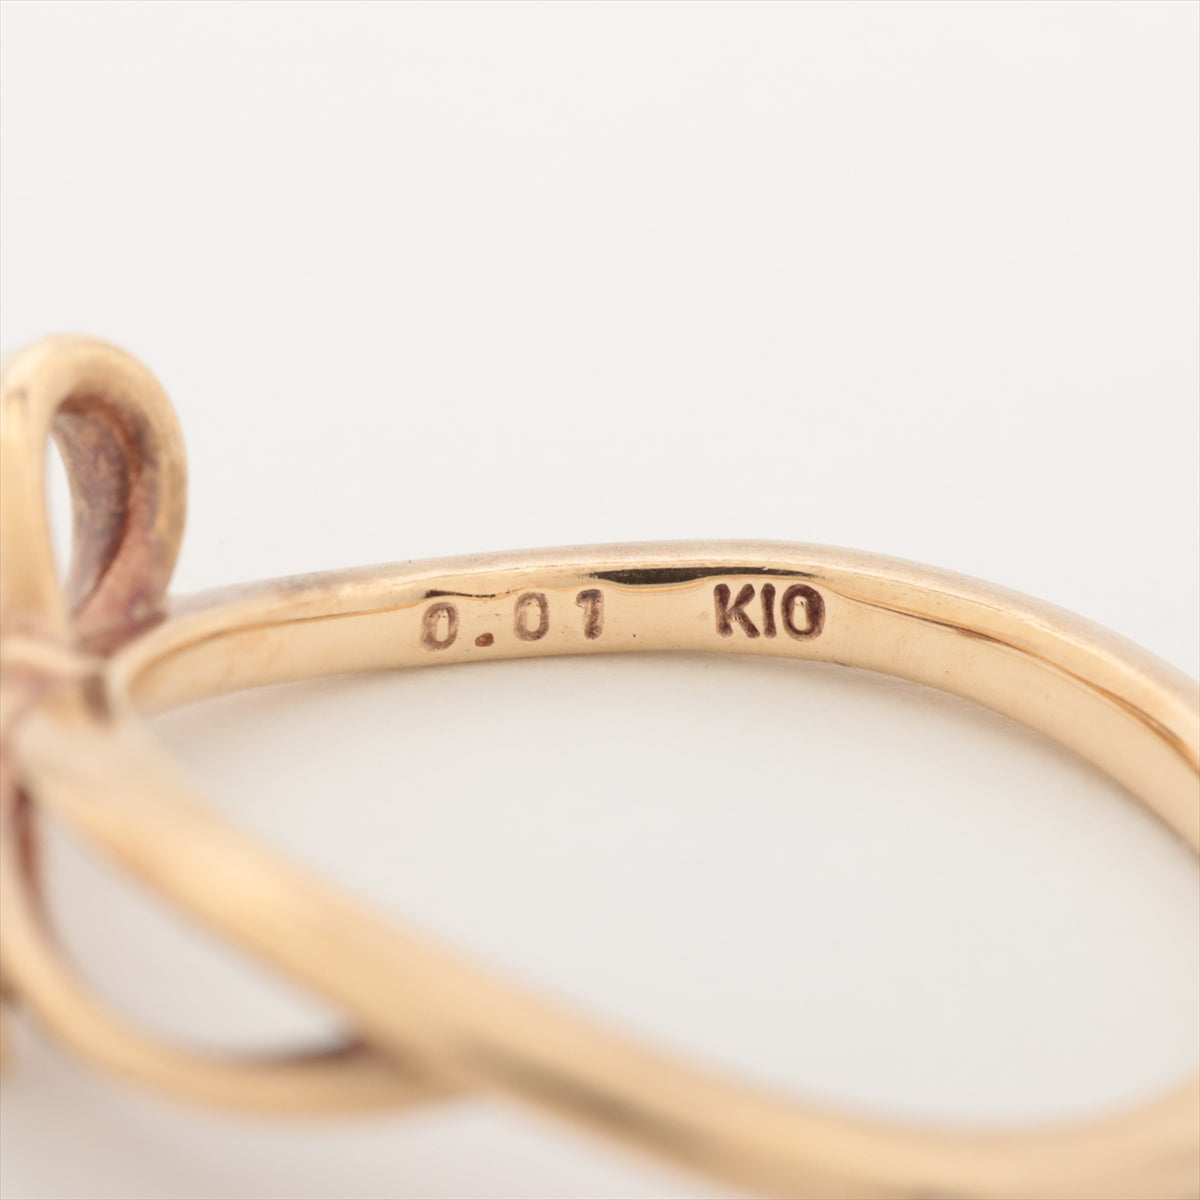 Agat Diamond Ring K10 (YG) 1.1g 0.01